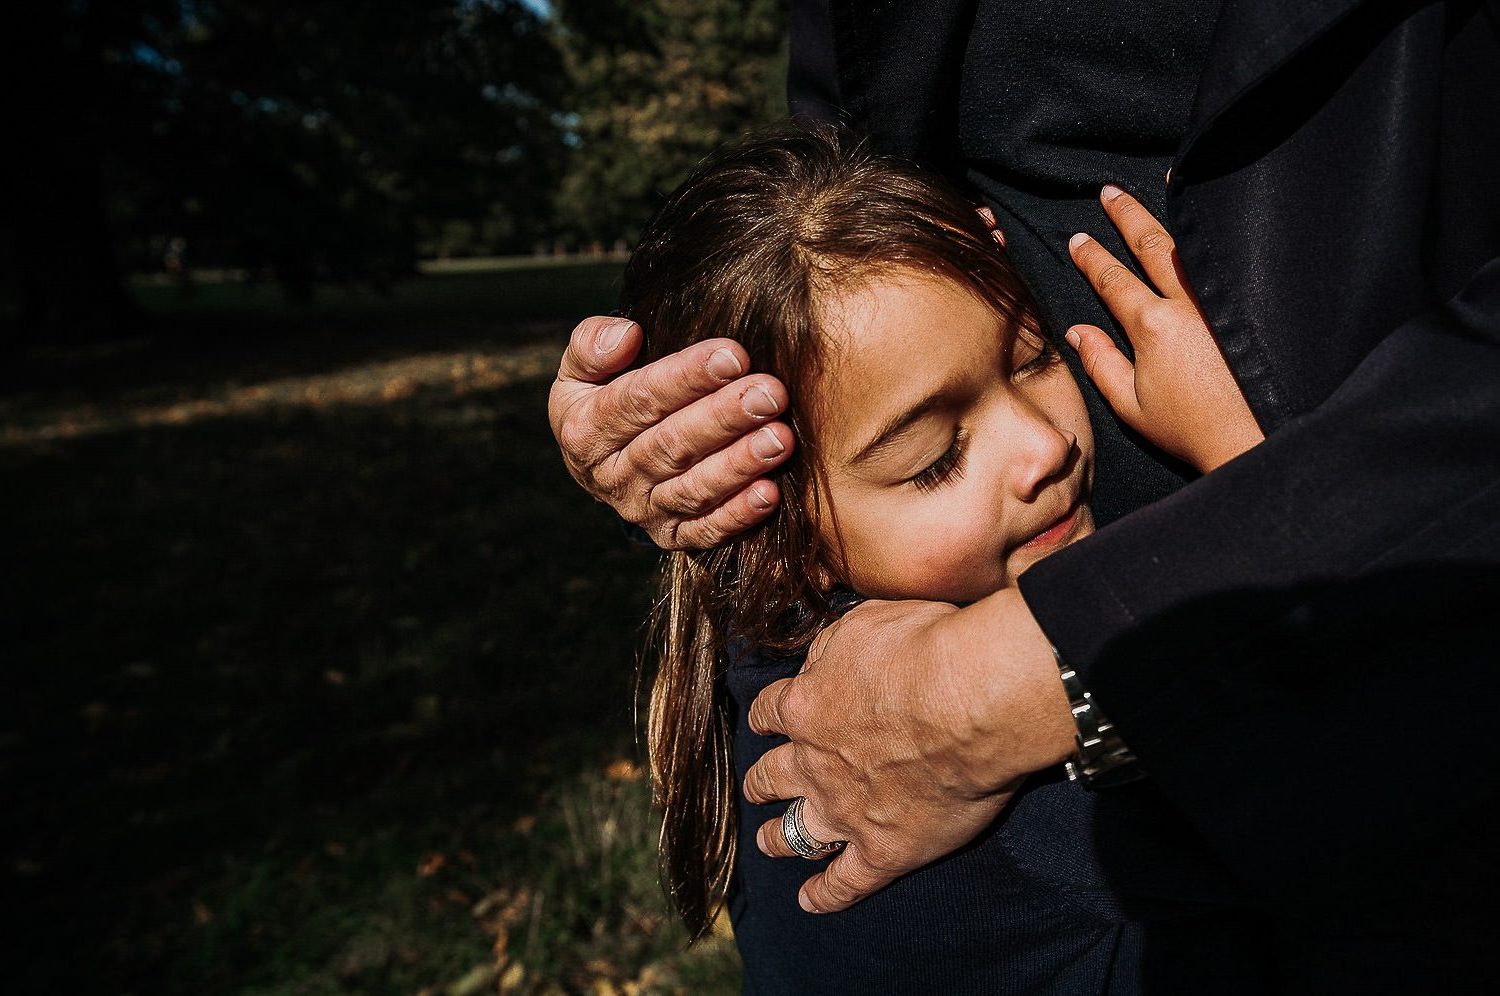 london family photographer parent embracing child's face close up shot